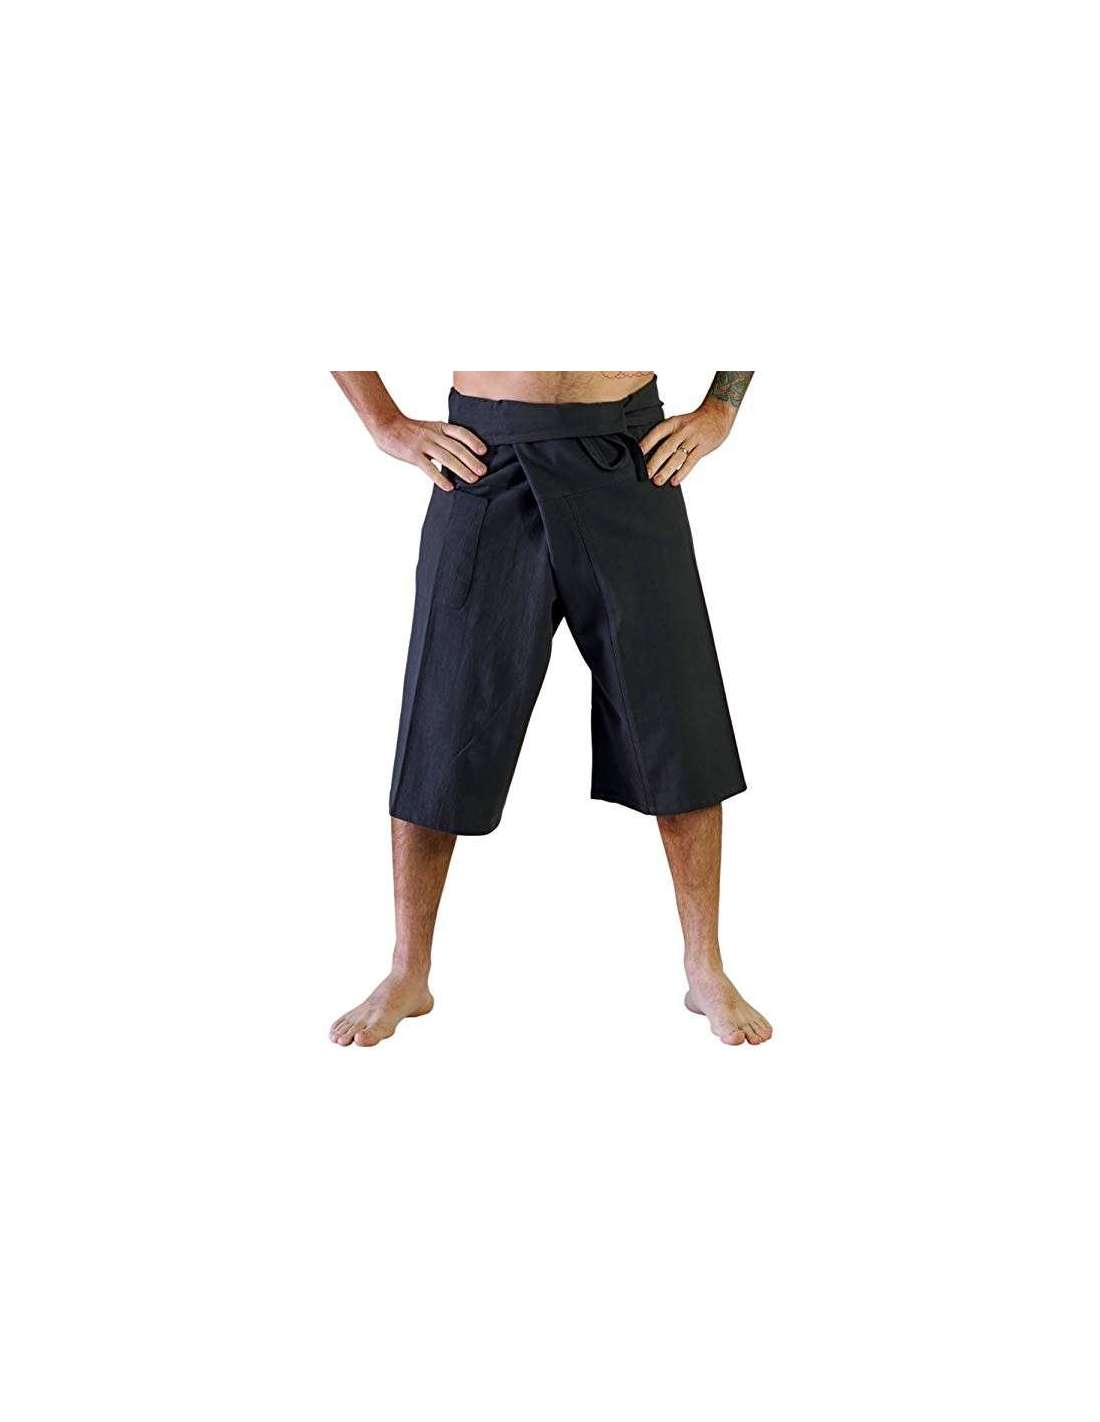 https://lagoashop.com/2644-thickbox_default/pantalon-tailandes-rayon-corto.jpg